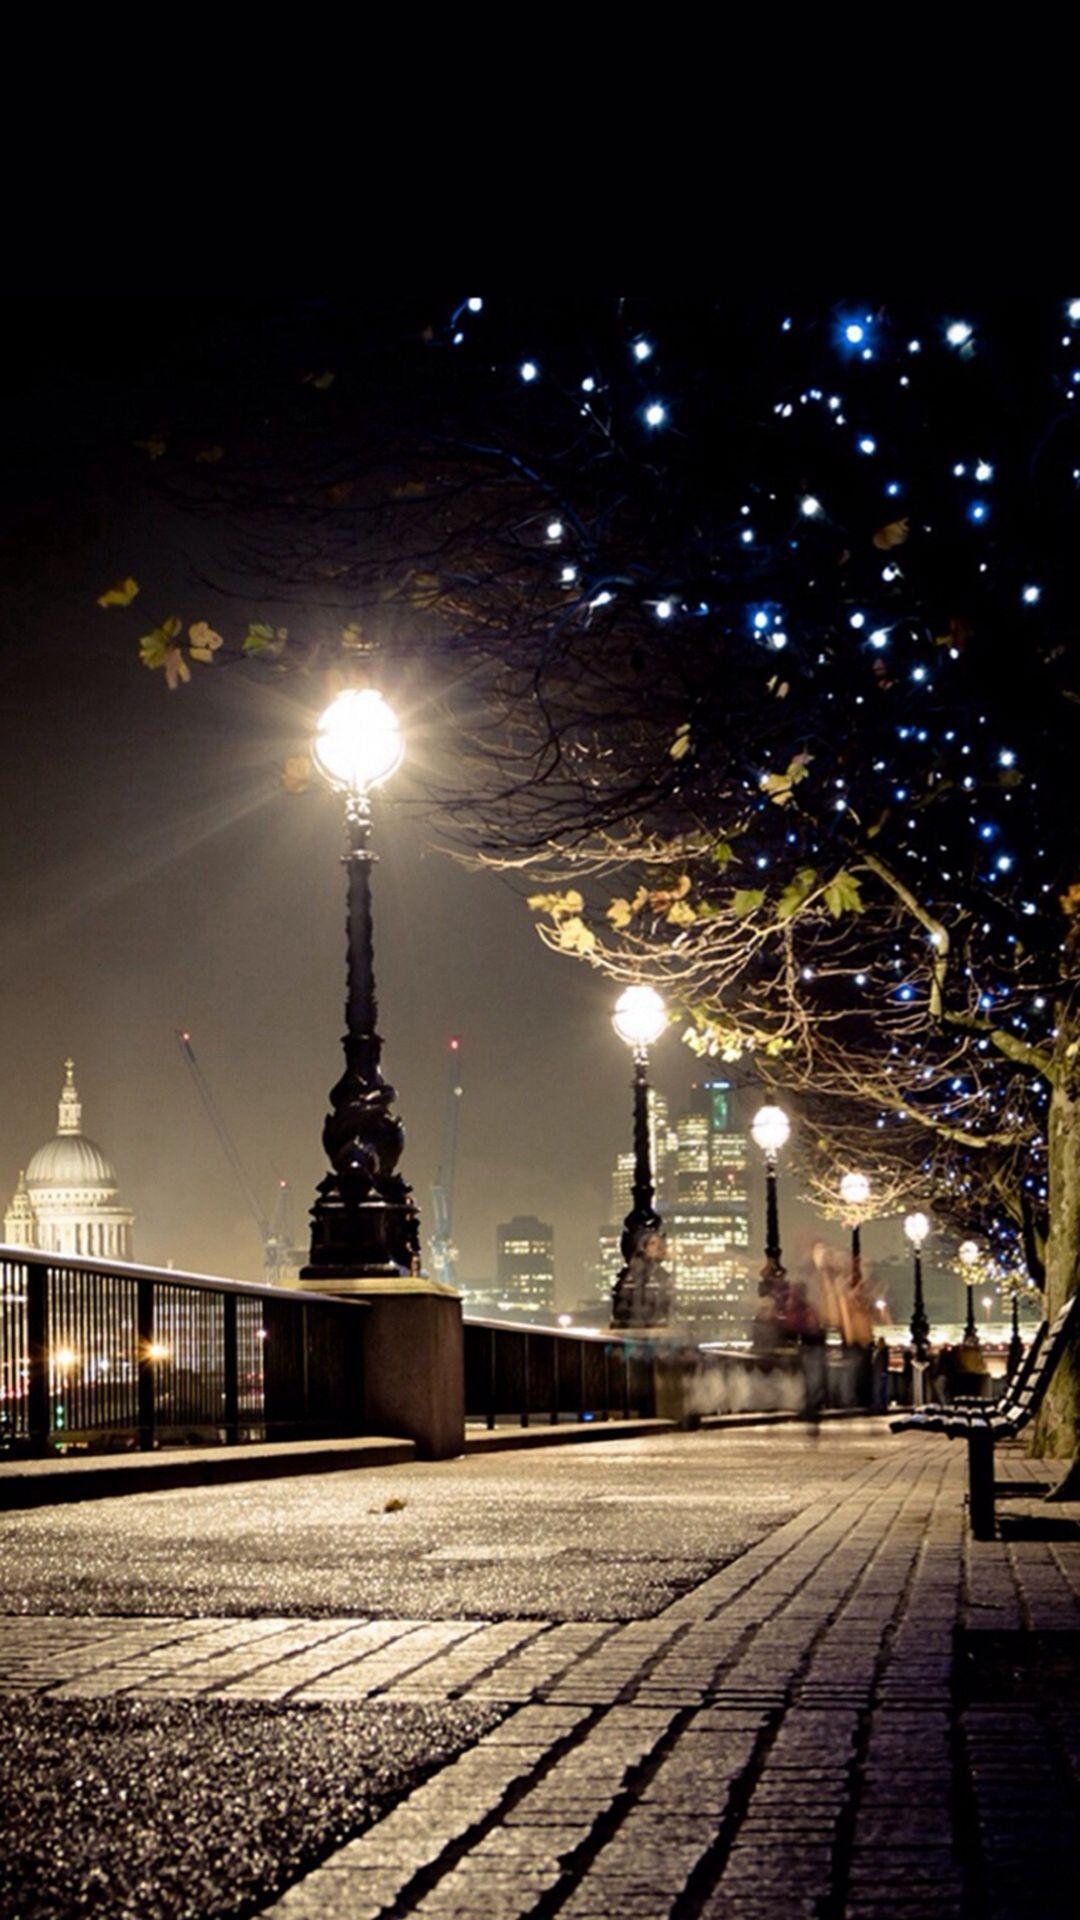 Dark Night Street Lamp Shiny Light IPhone 6 Wallpaper Download. IPhone Wallpaper, IPad Wallpaper One Stop Do. Walks In London, Beautiful Places, London England